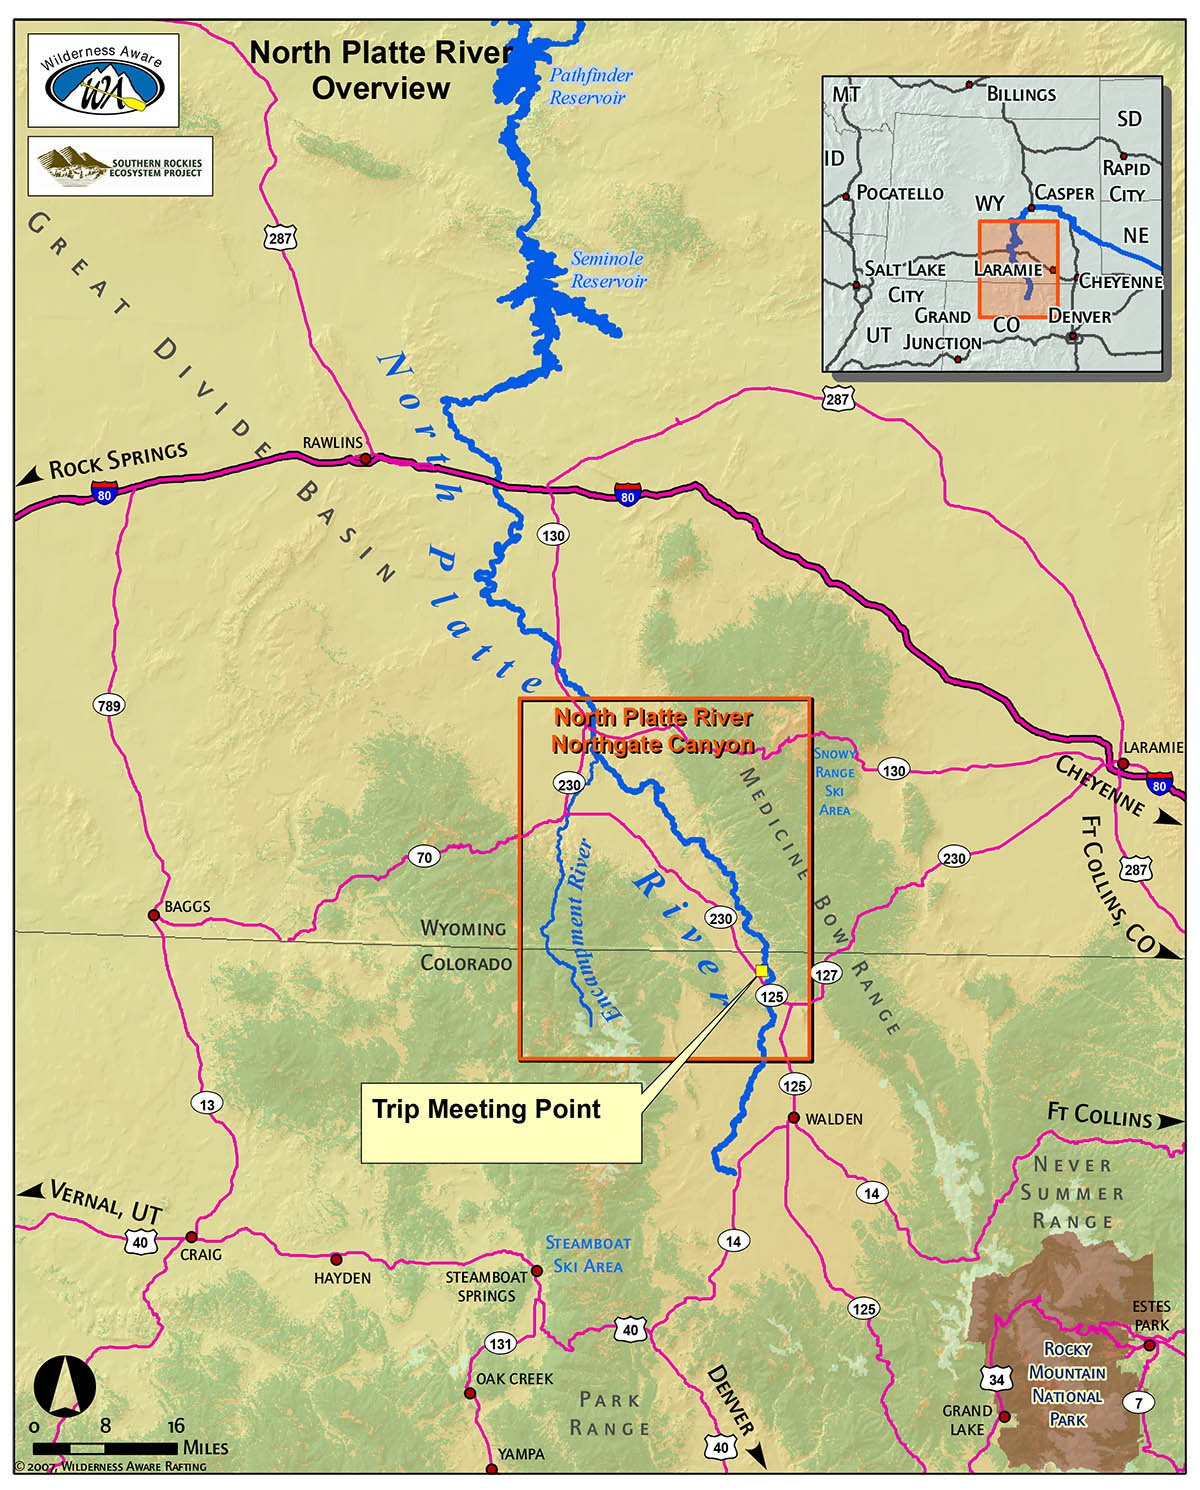 North Platte River Rafting Maps Wilderness Aware Rafting